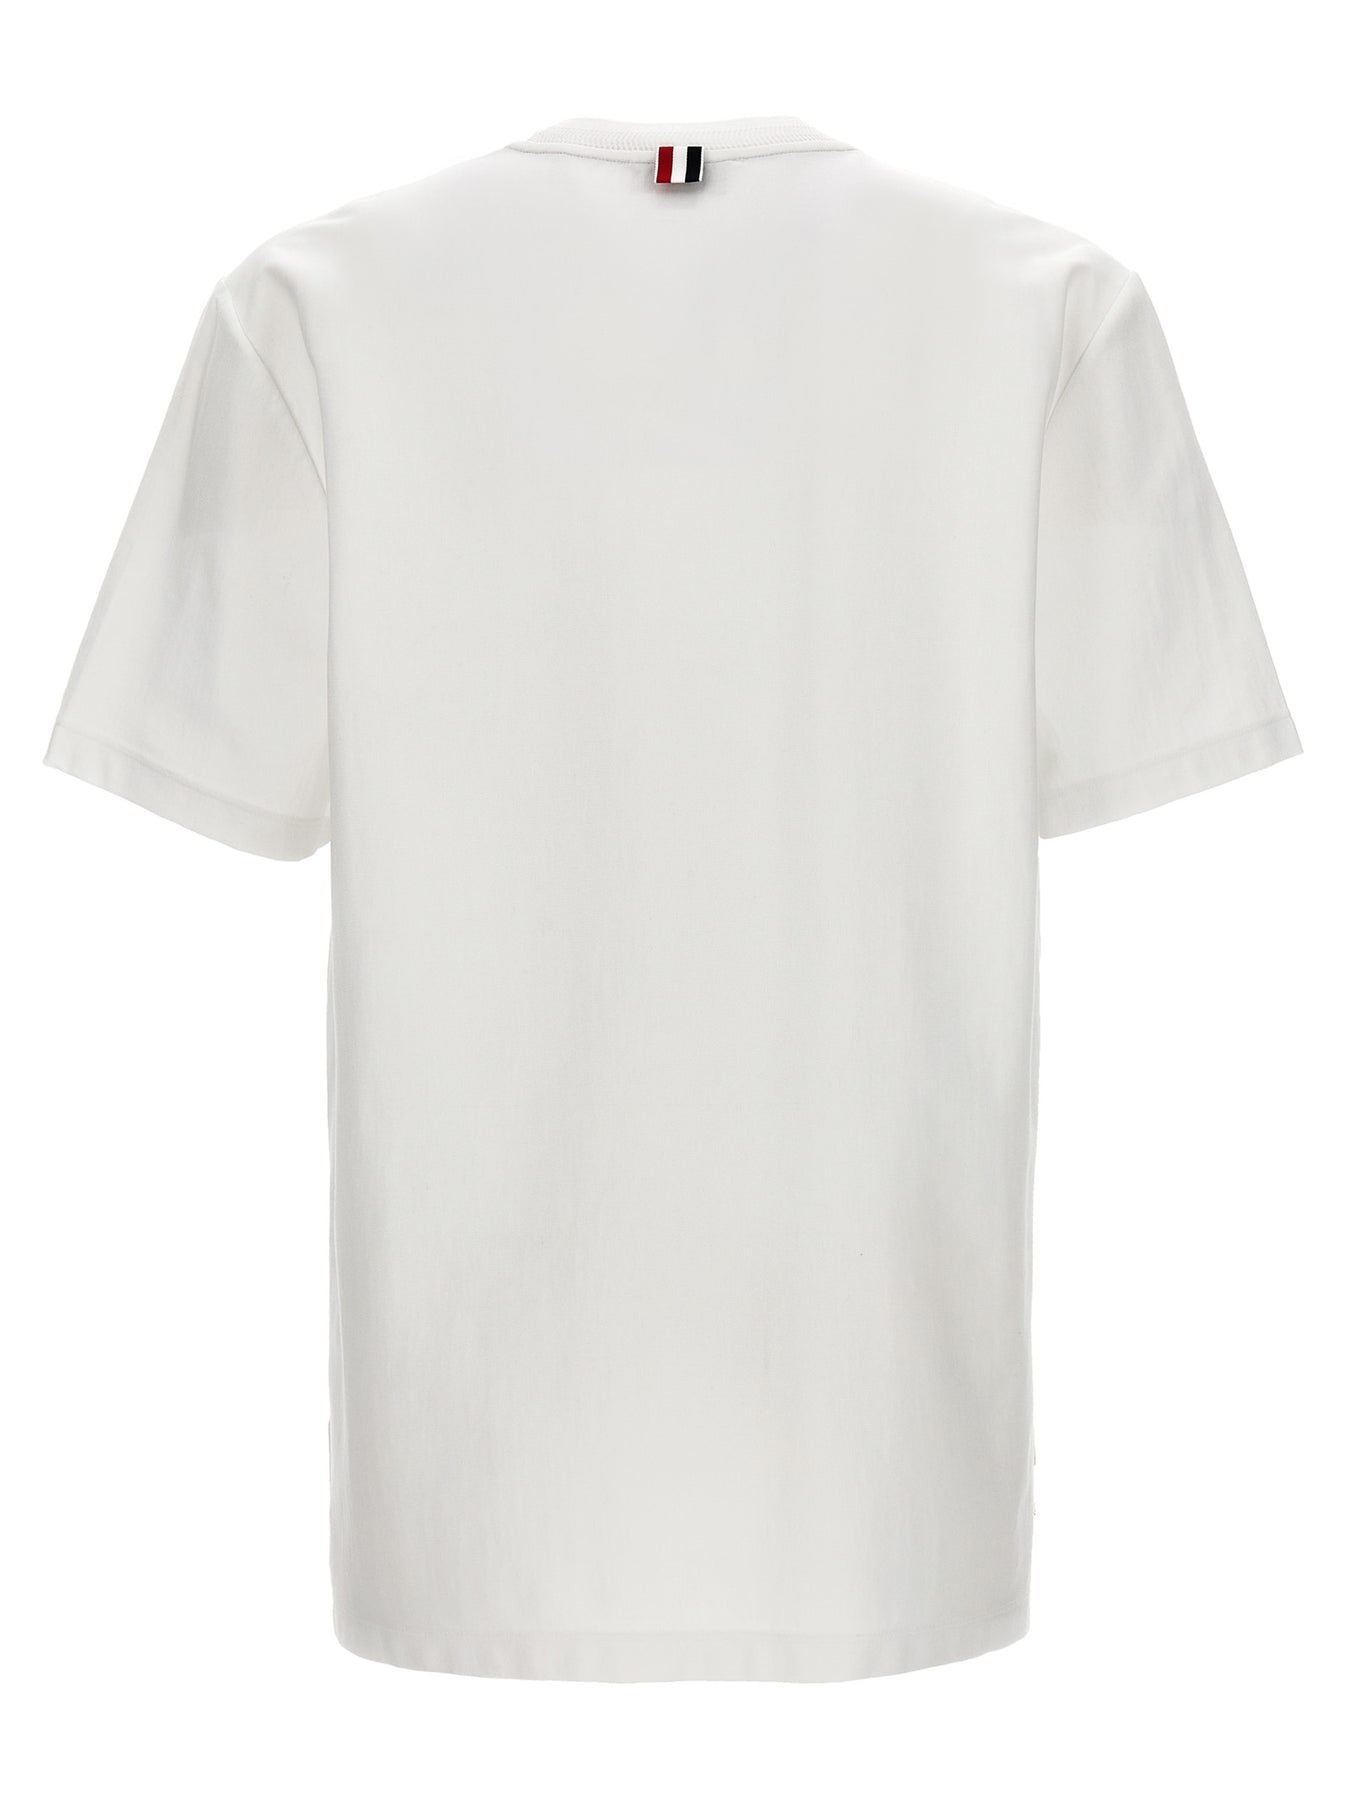 Rwb T-Shirt White - 2